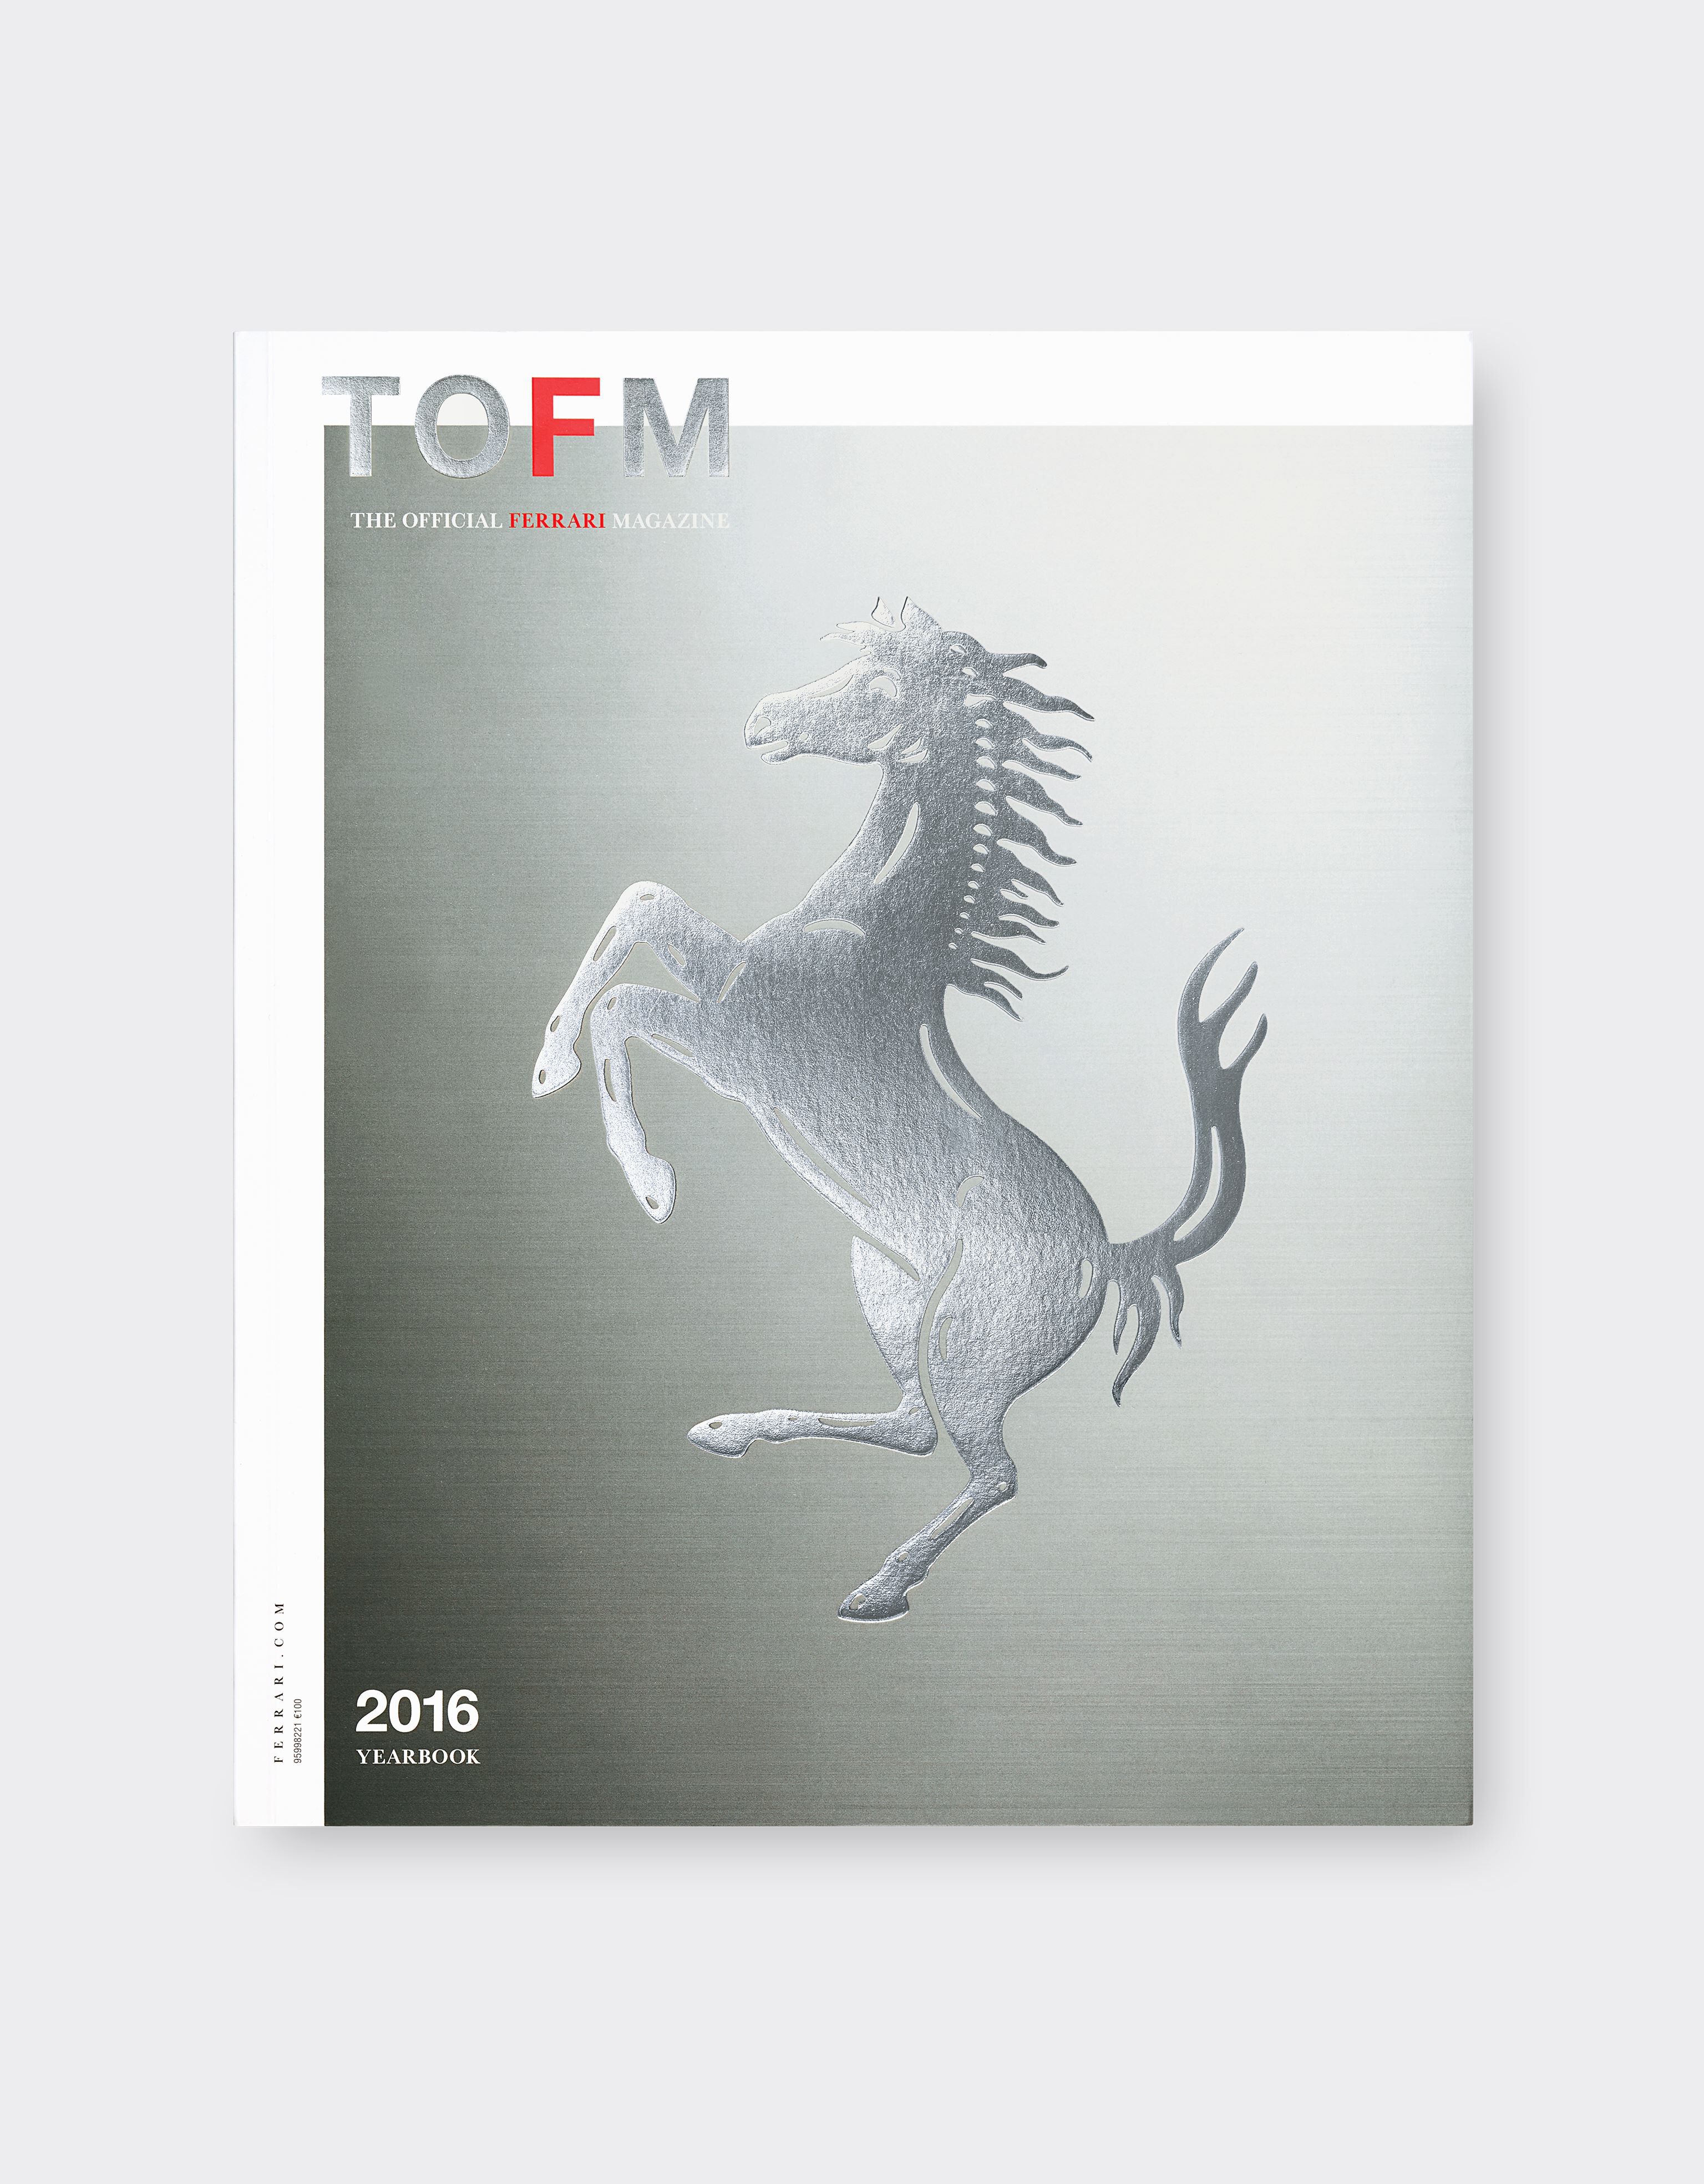 Ferrari The Official Ferrari Magazine issue 34 - 2016 Yearbook Yellow F0650f